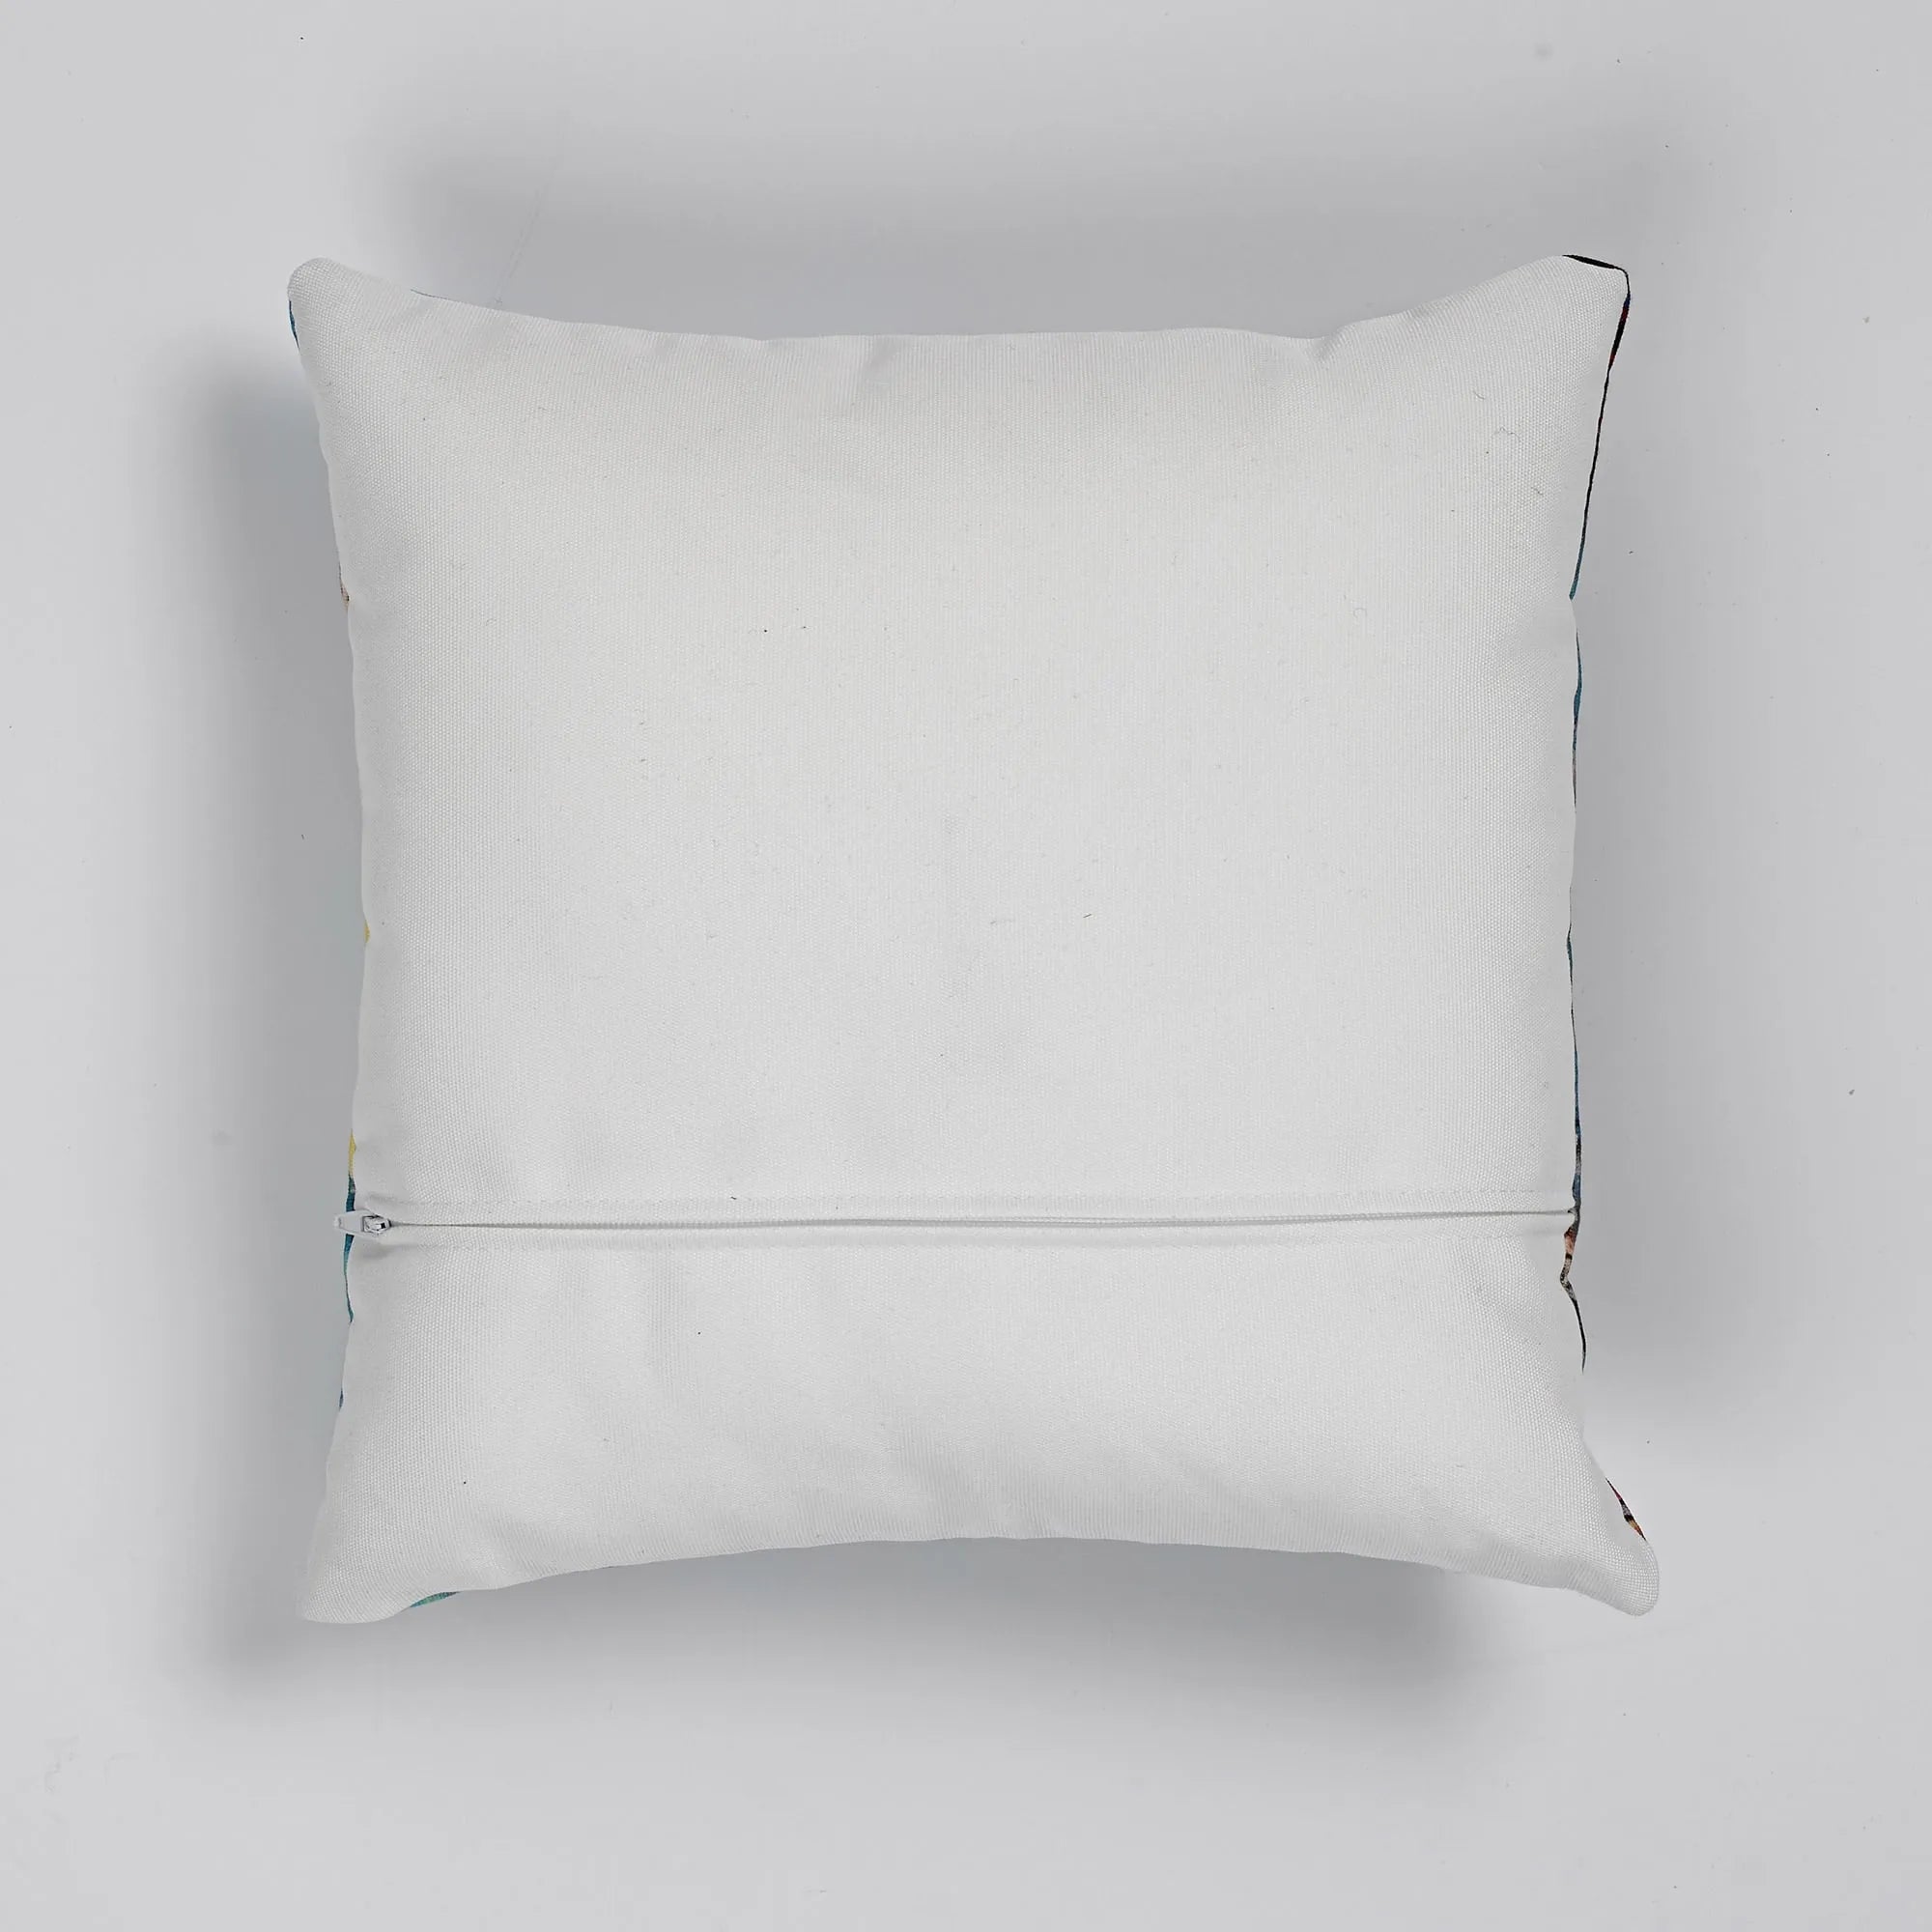 Honeysuckle Too - William Morris Cushion - Decorative Throw Pillow - Throw Pillows - Aesthetic Art